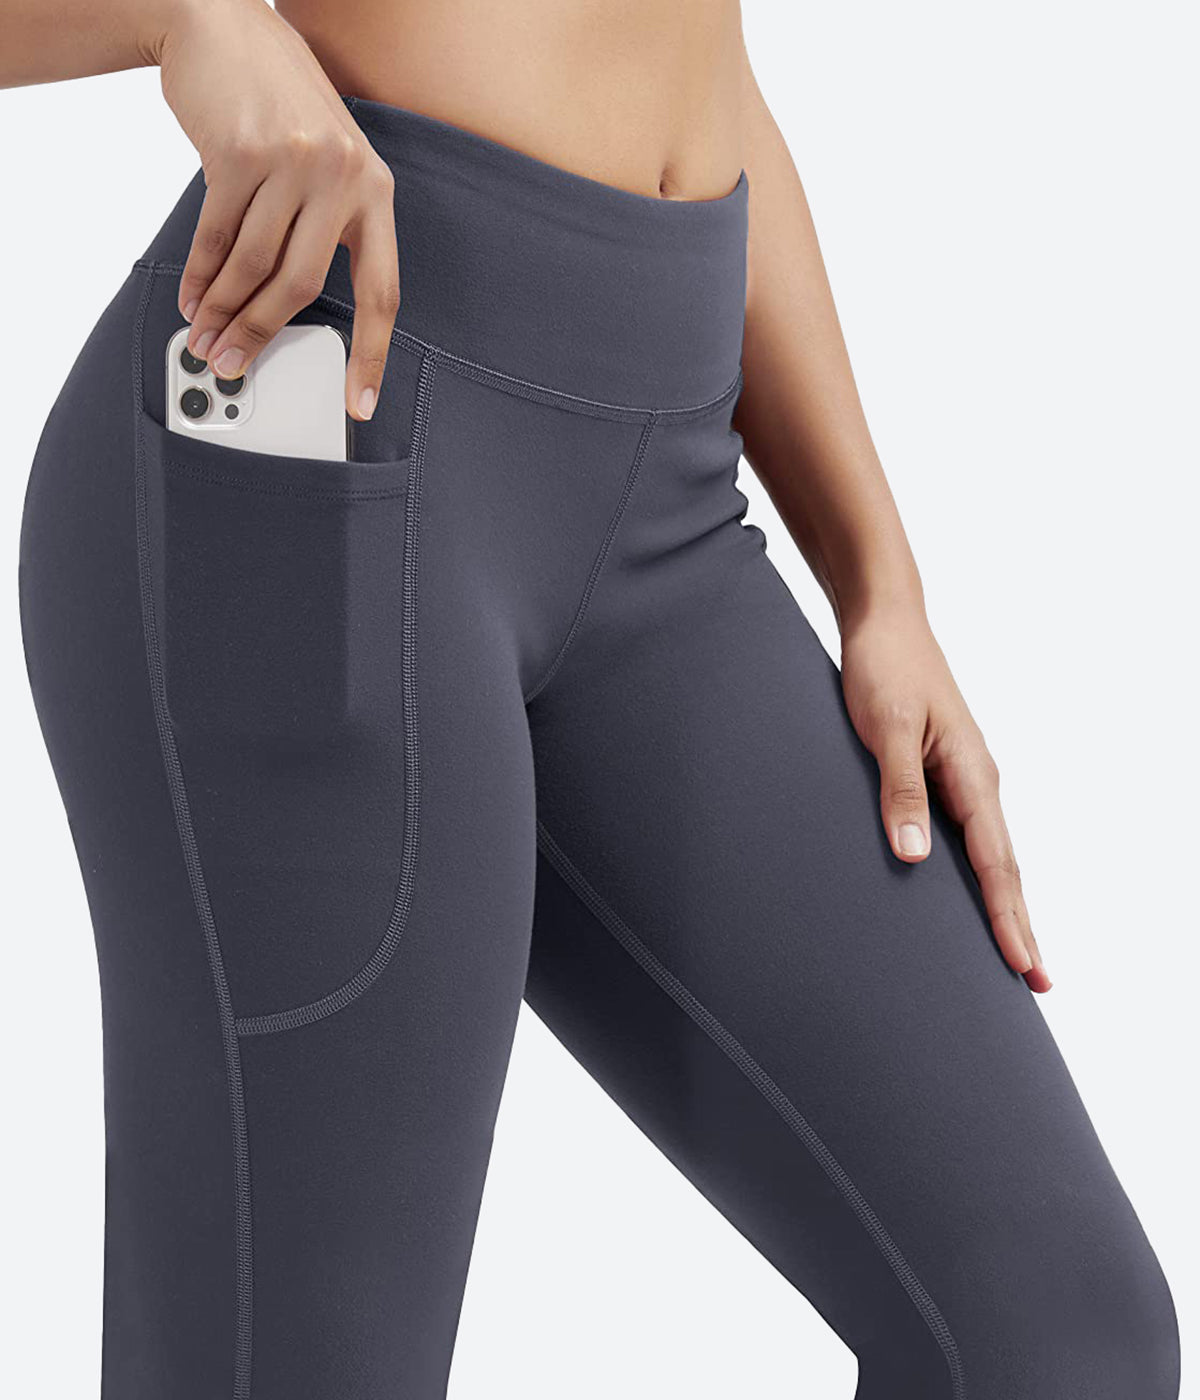 Heathyoga Capri Pants for Women Bootcut Capri Yoga Pants with Pockets